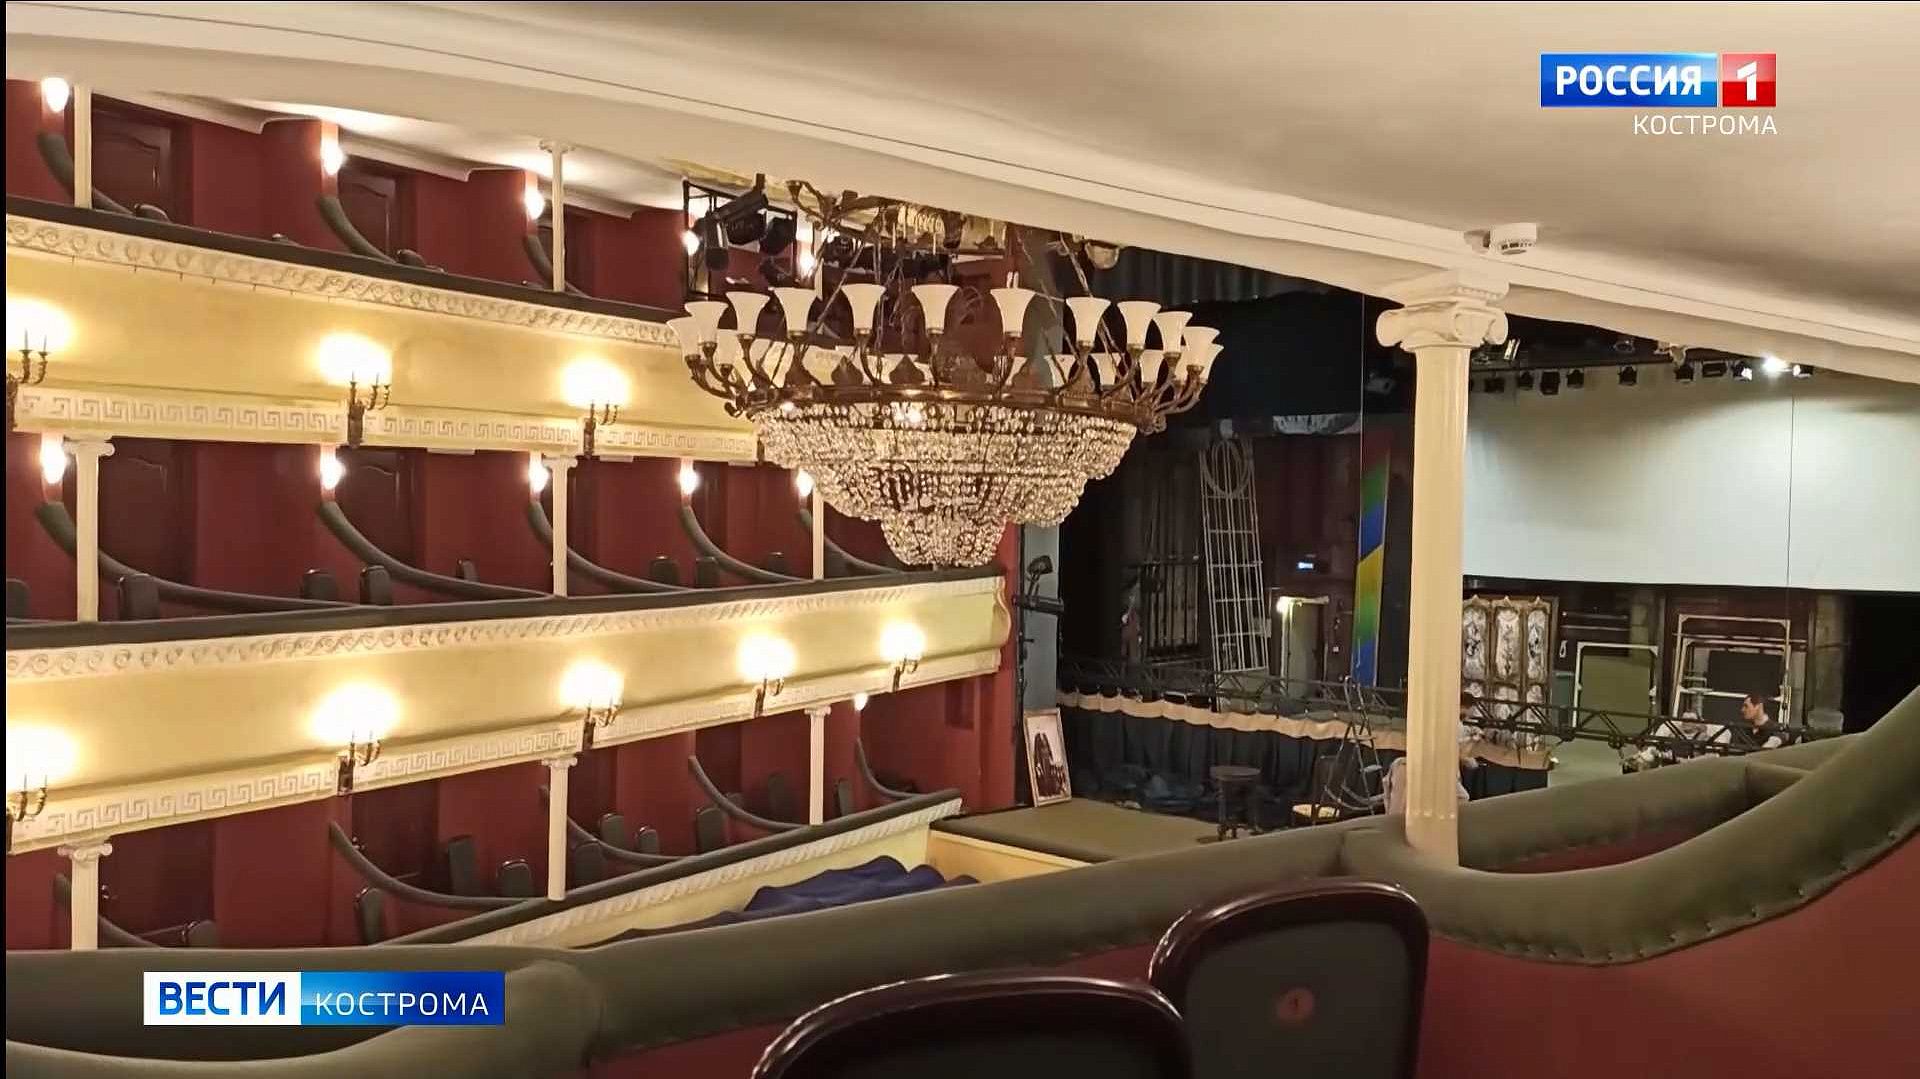 драматический театр имени островского кострома